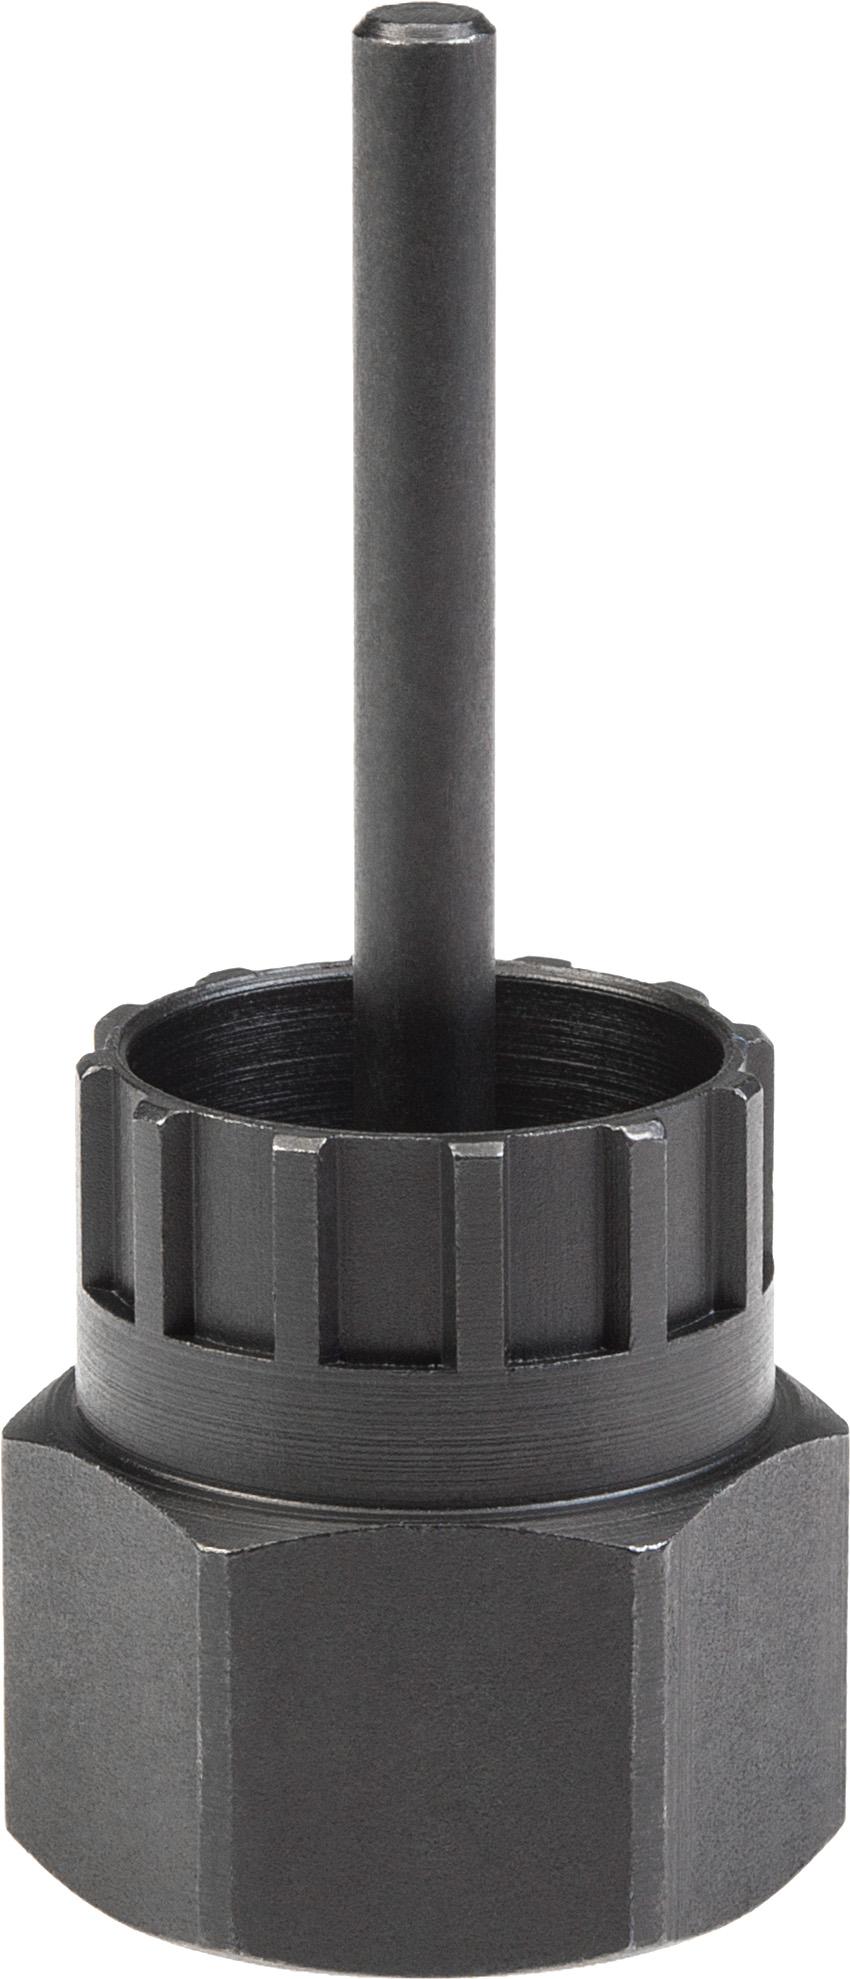 Image of Park Tool FR-5.2G Cassette Lockring Tool, Black